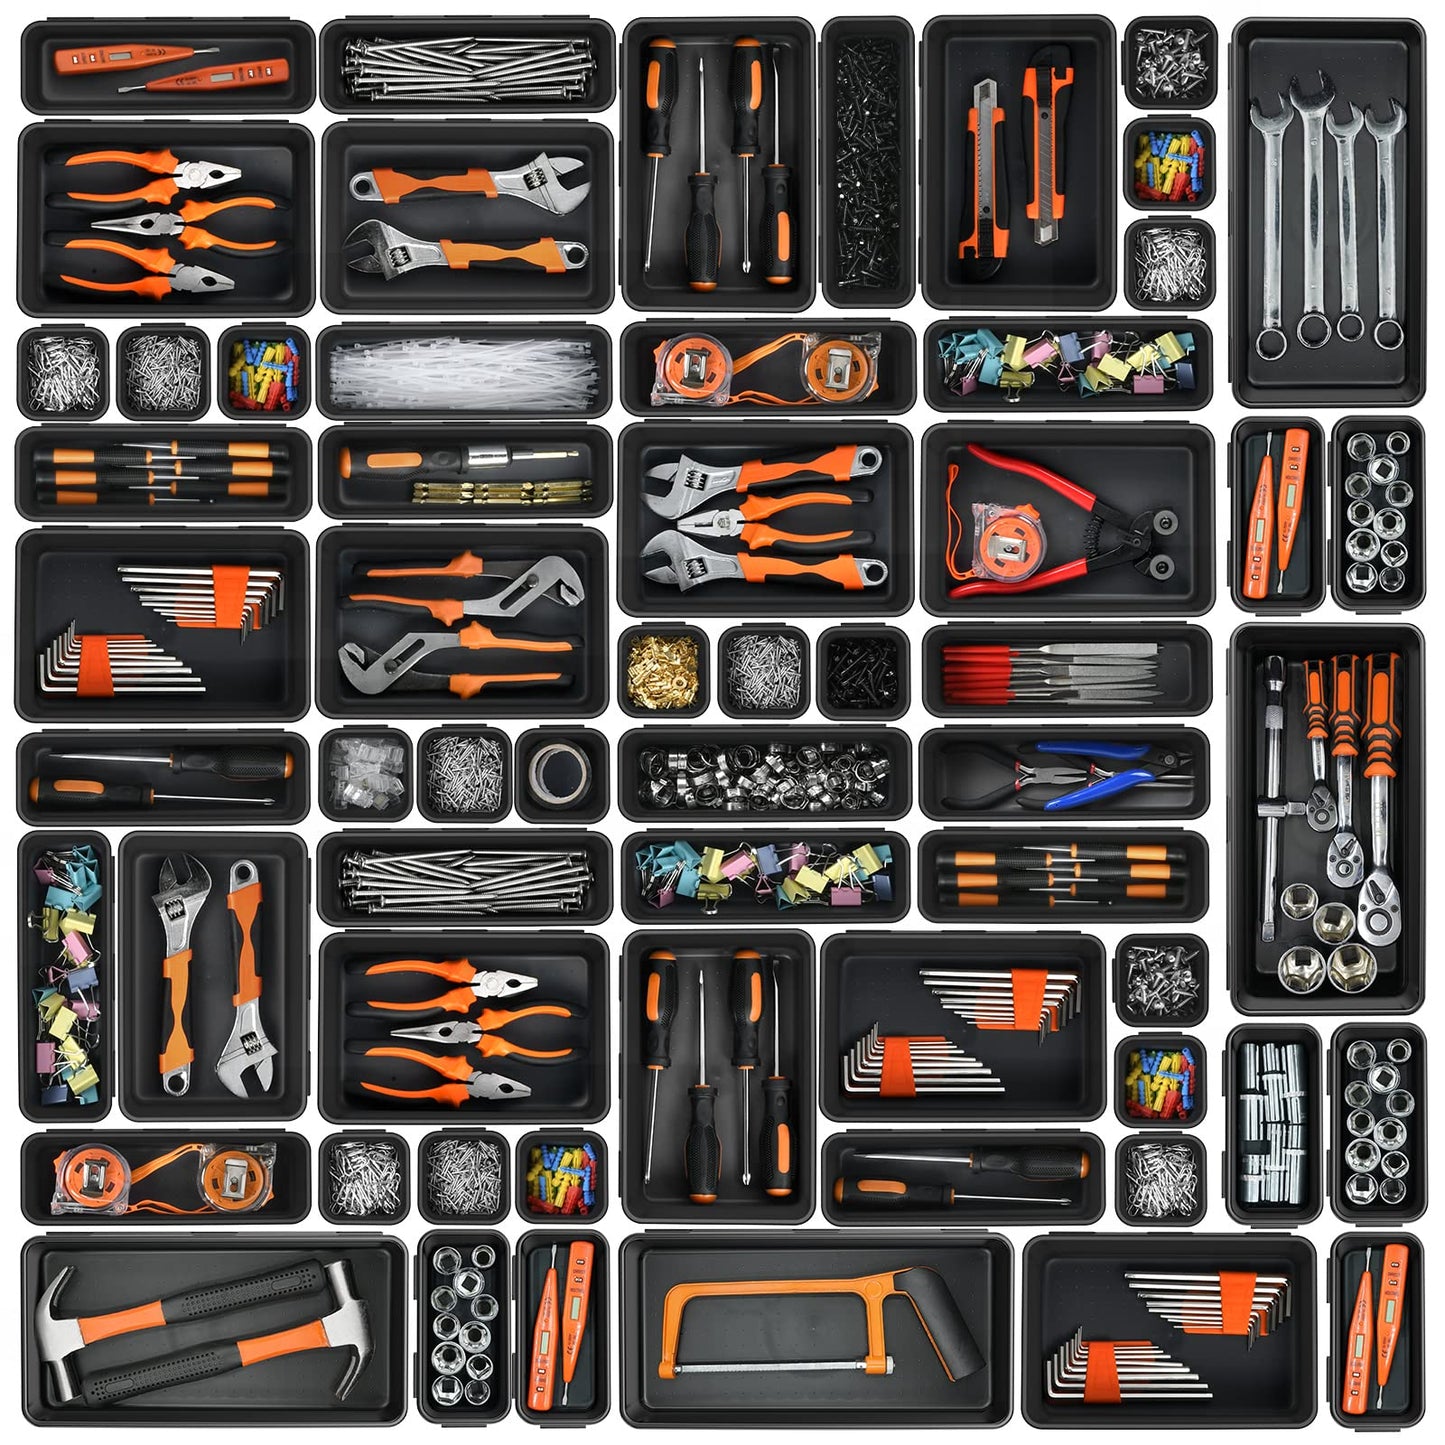 A-LuGei【𝟰𝟲𝗣𝗖𝗦【5 Size】 Tool Box Organizer Tray Divider Set, 【Black】 Desk Drawer Organizer, Garage Organization and Storage Toolbox Accessories Rolling